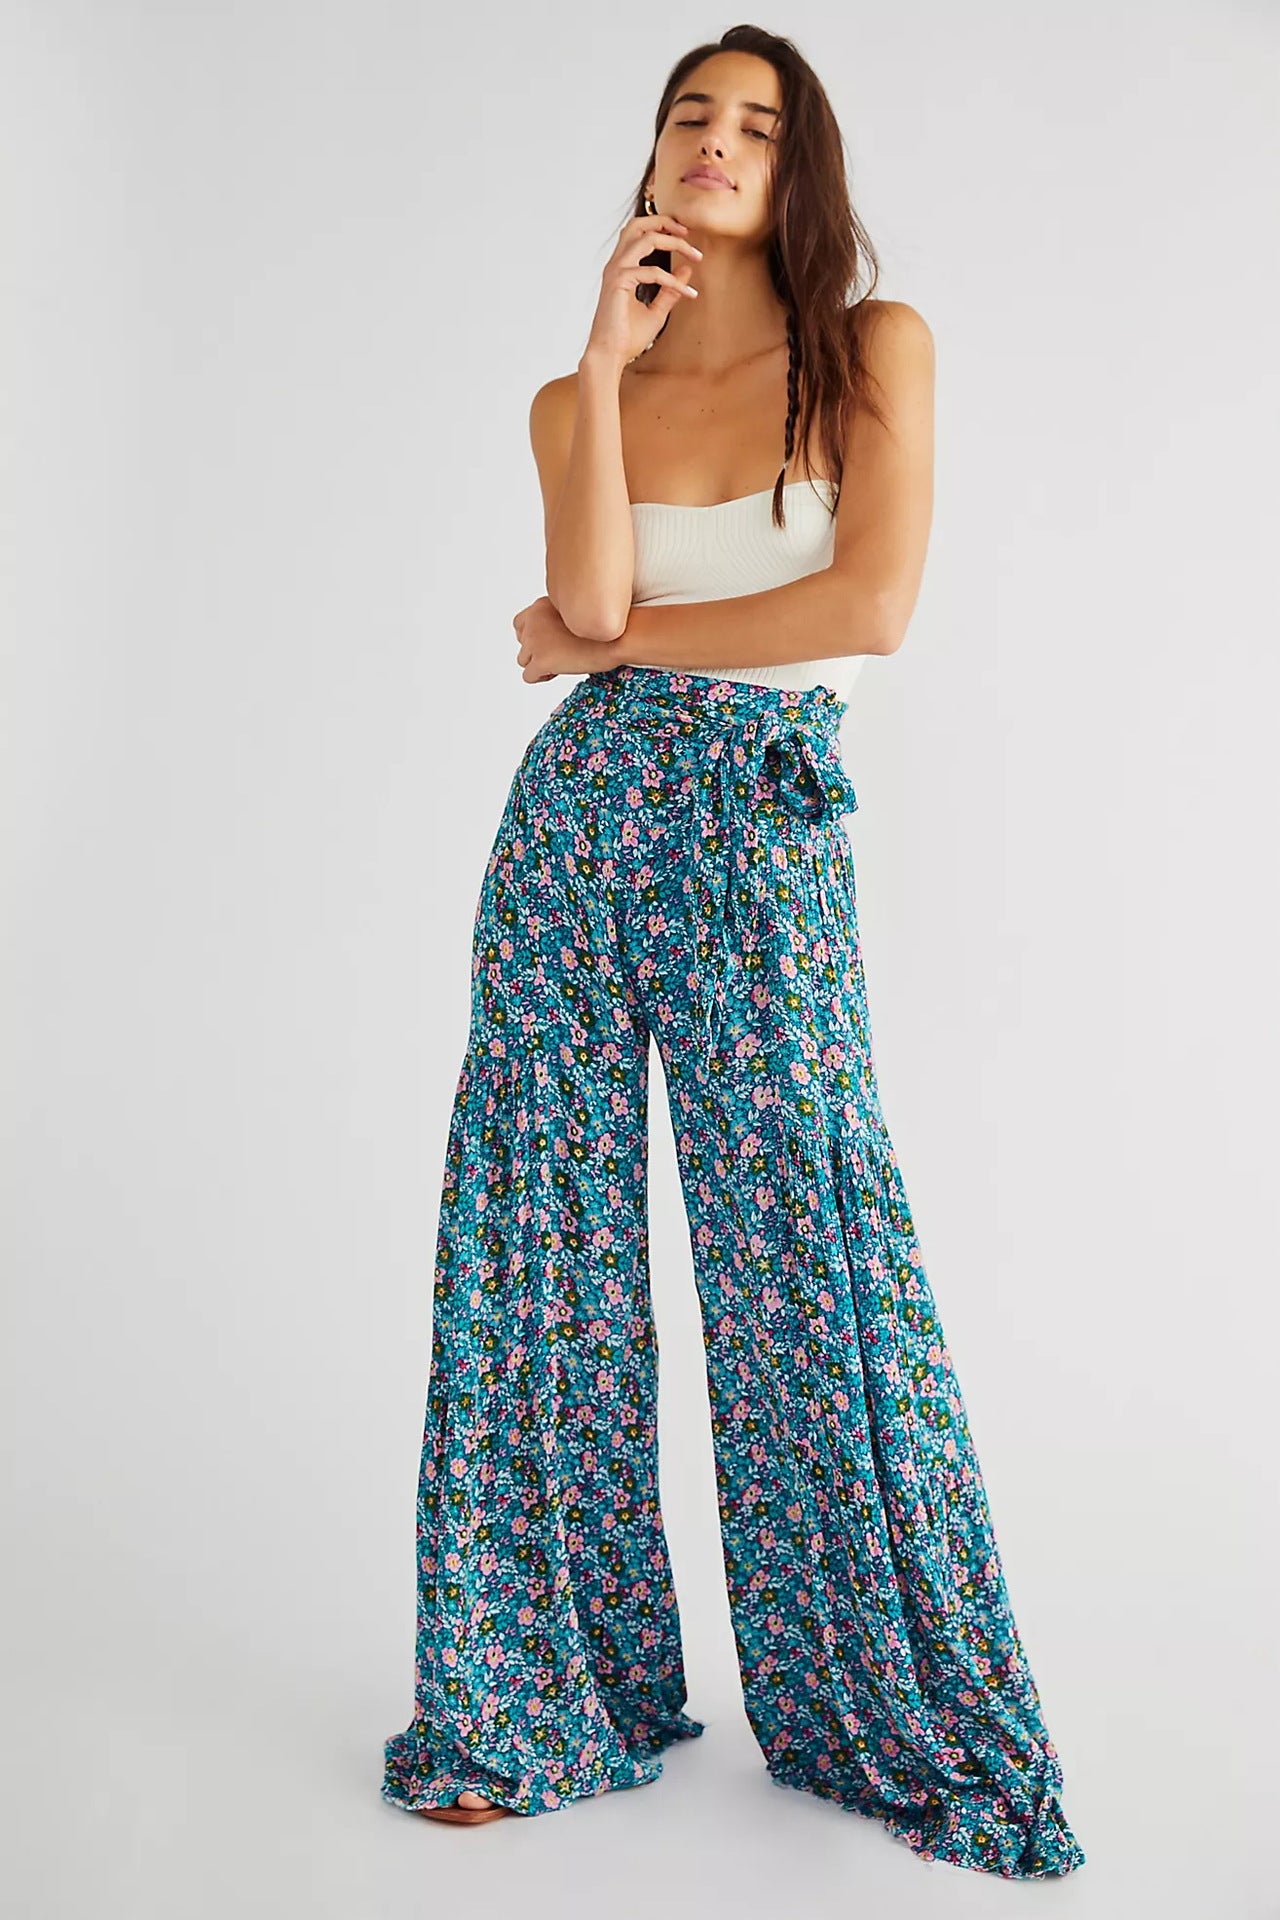 Women's Digital Printed Loose Casual Trousers Beach Wide-leg Pants